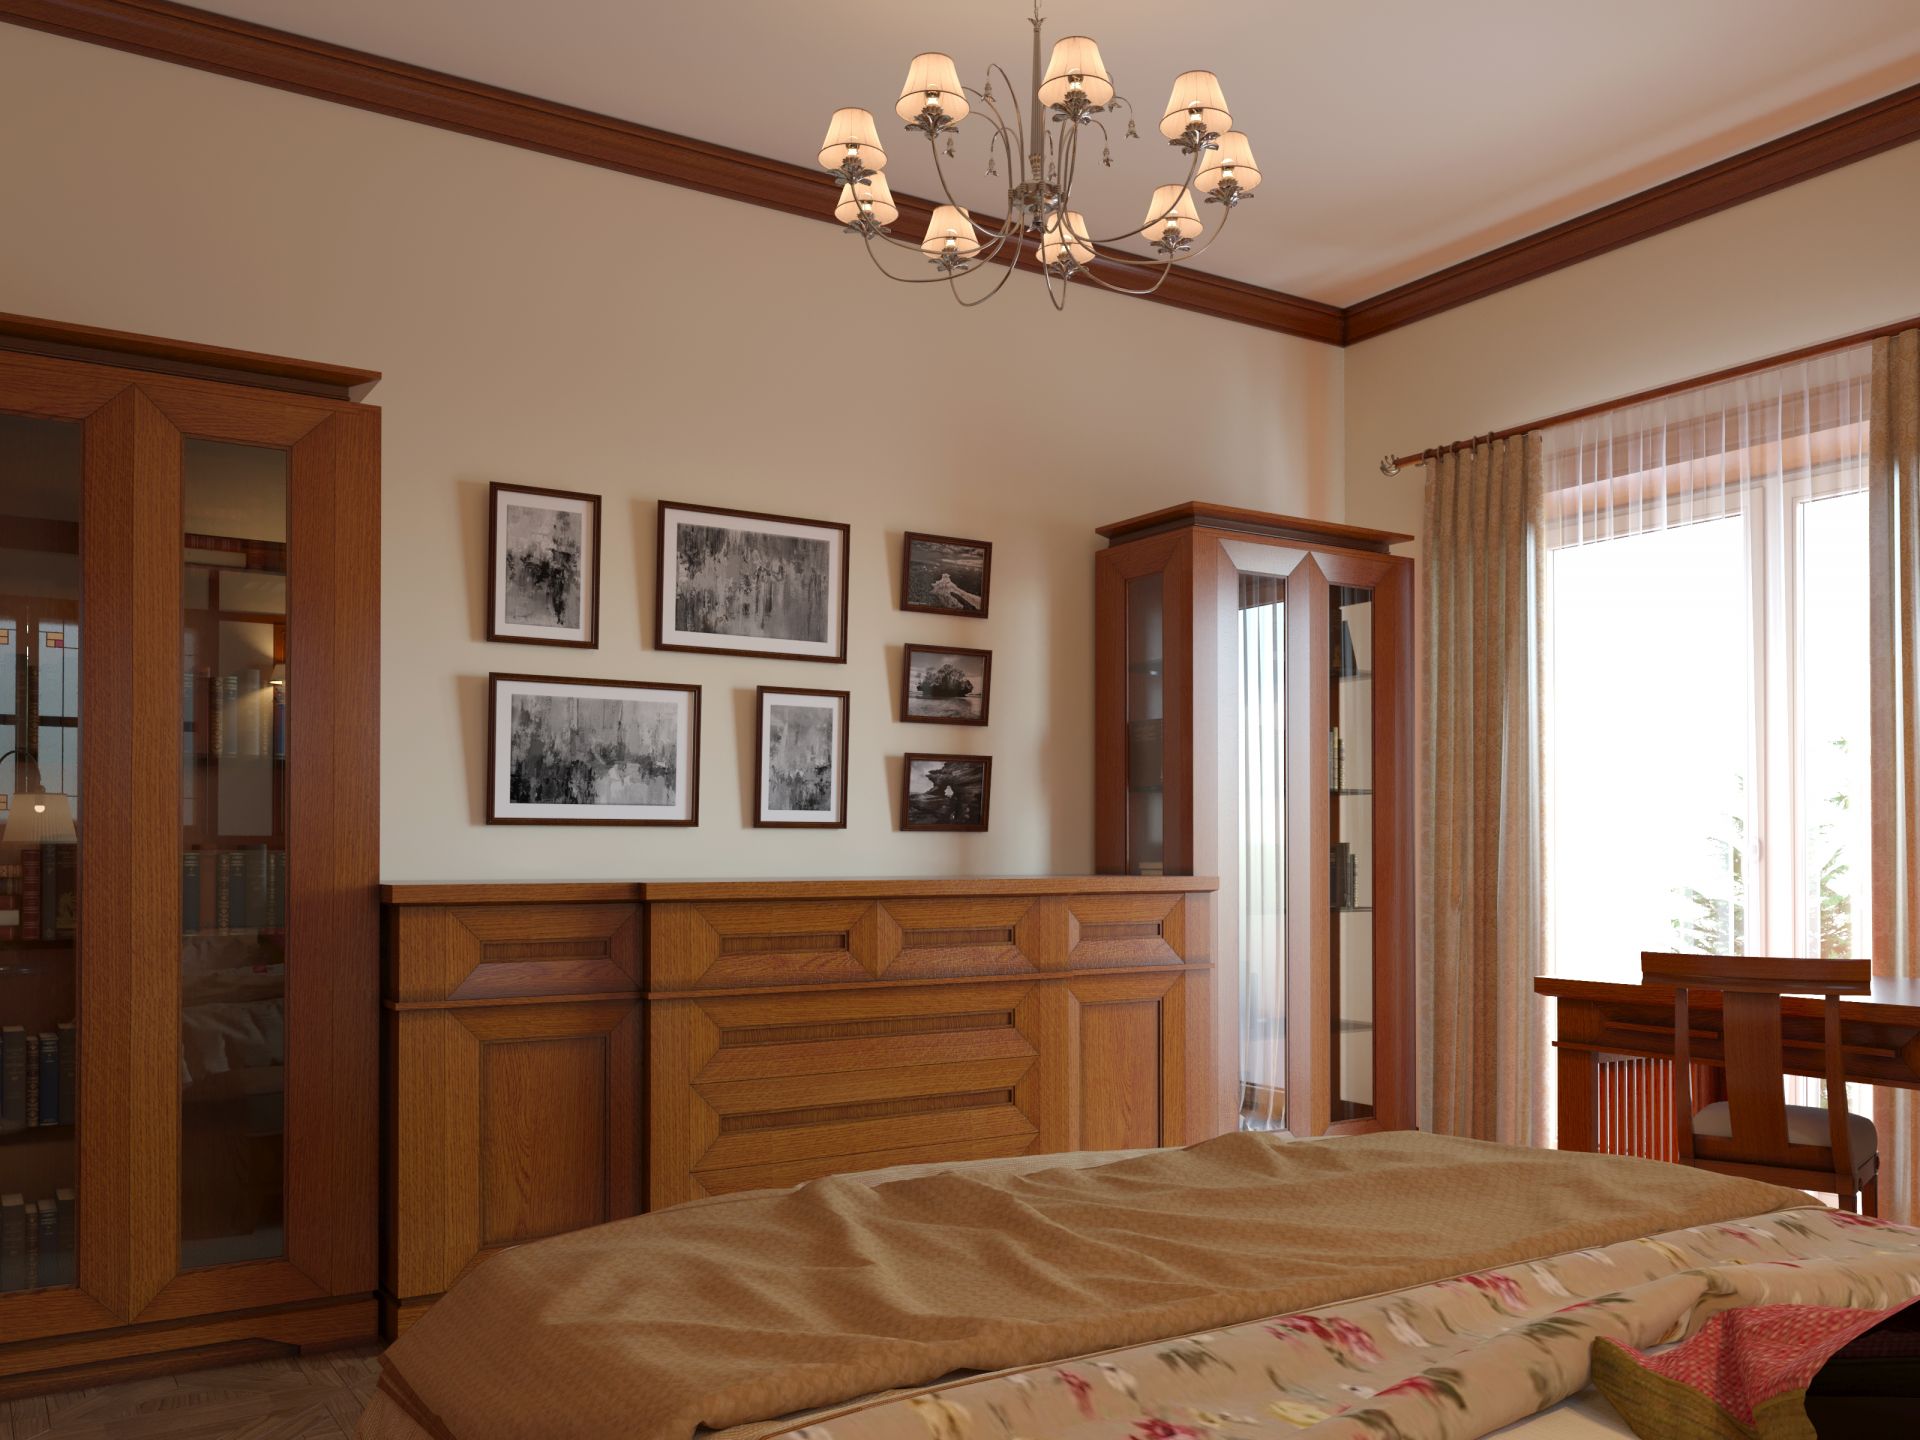 American-style bedroom interior